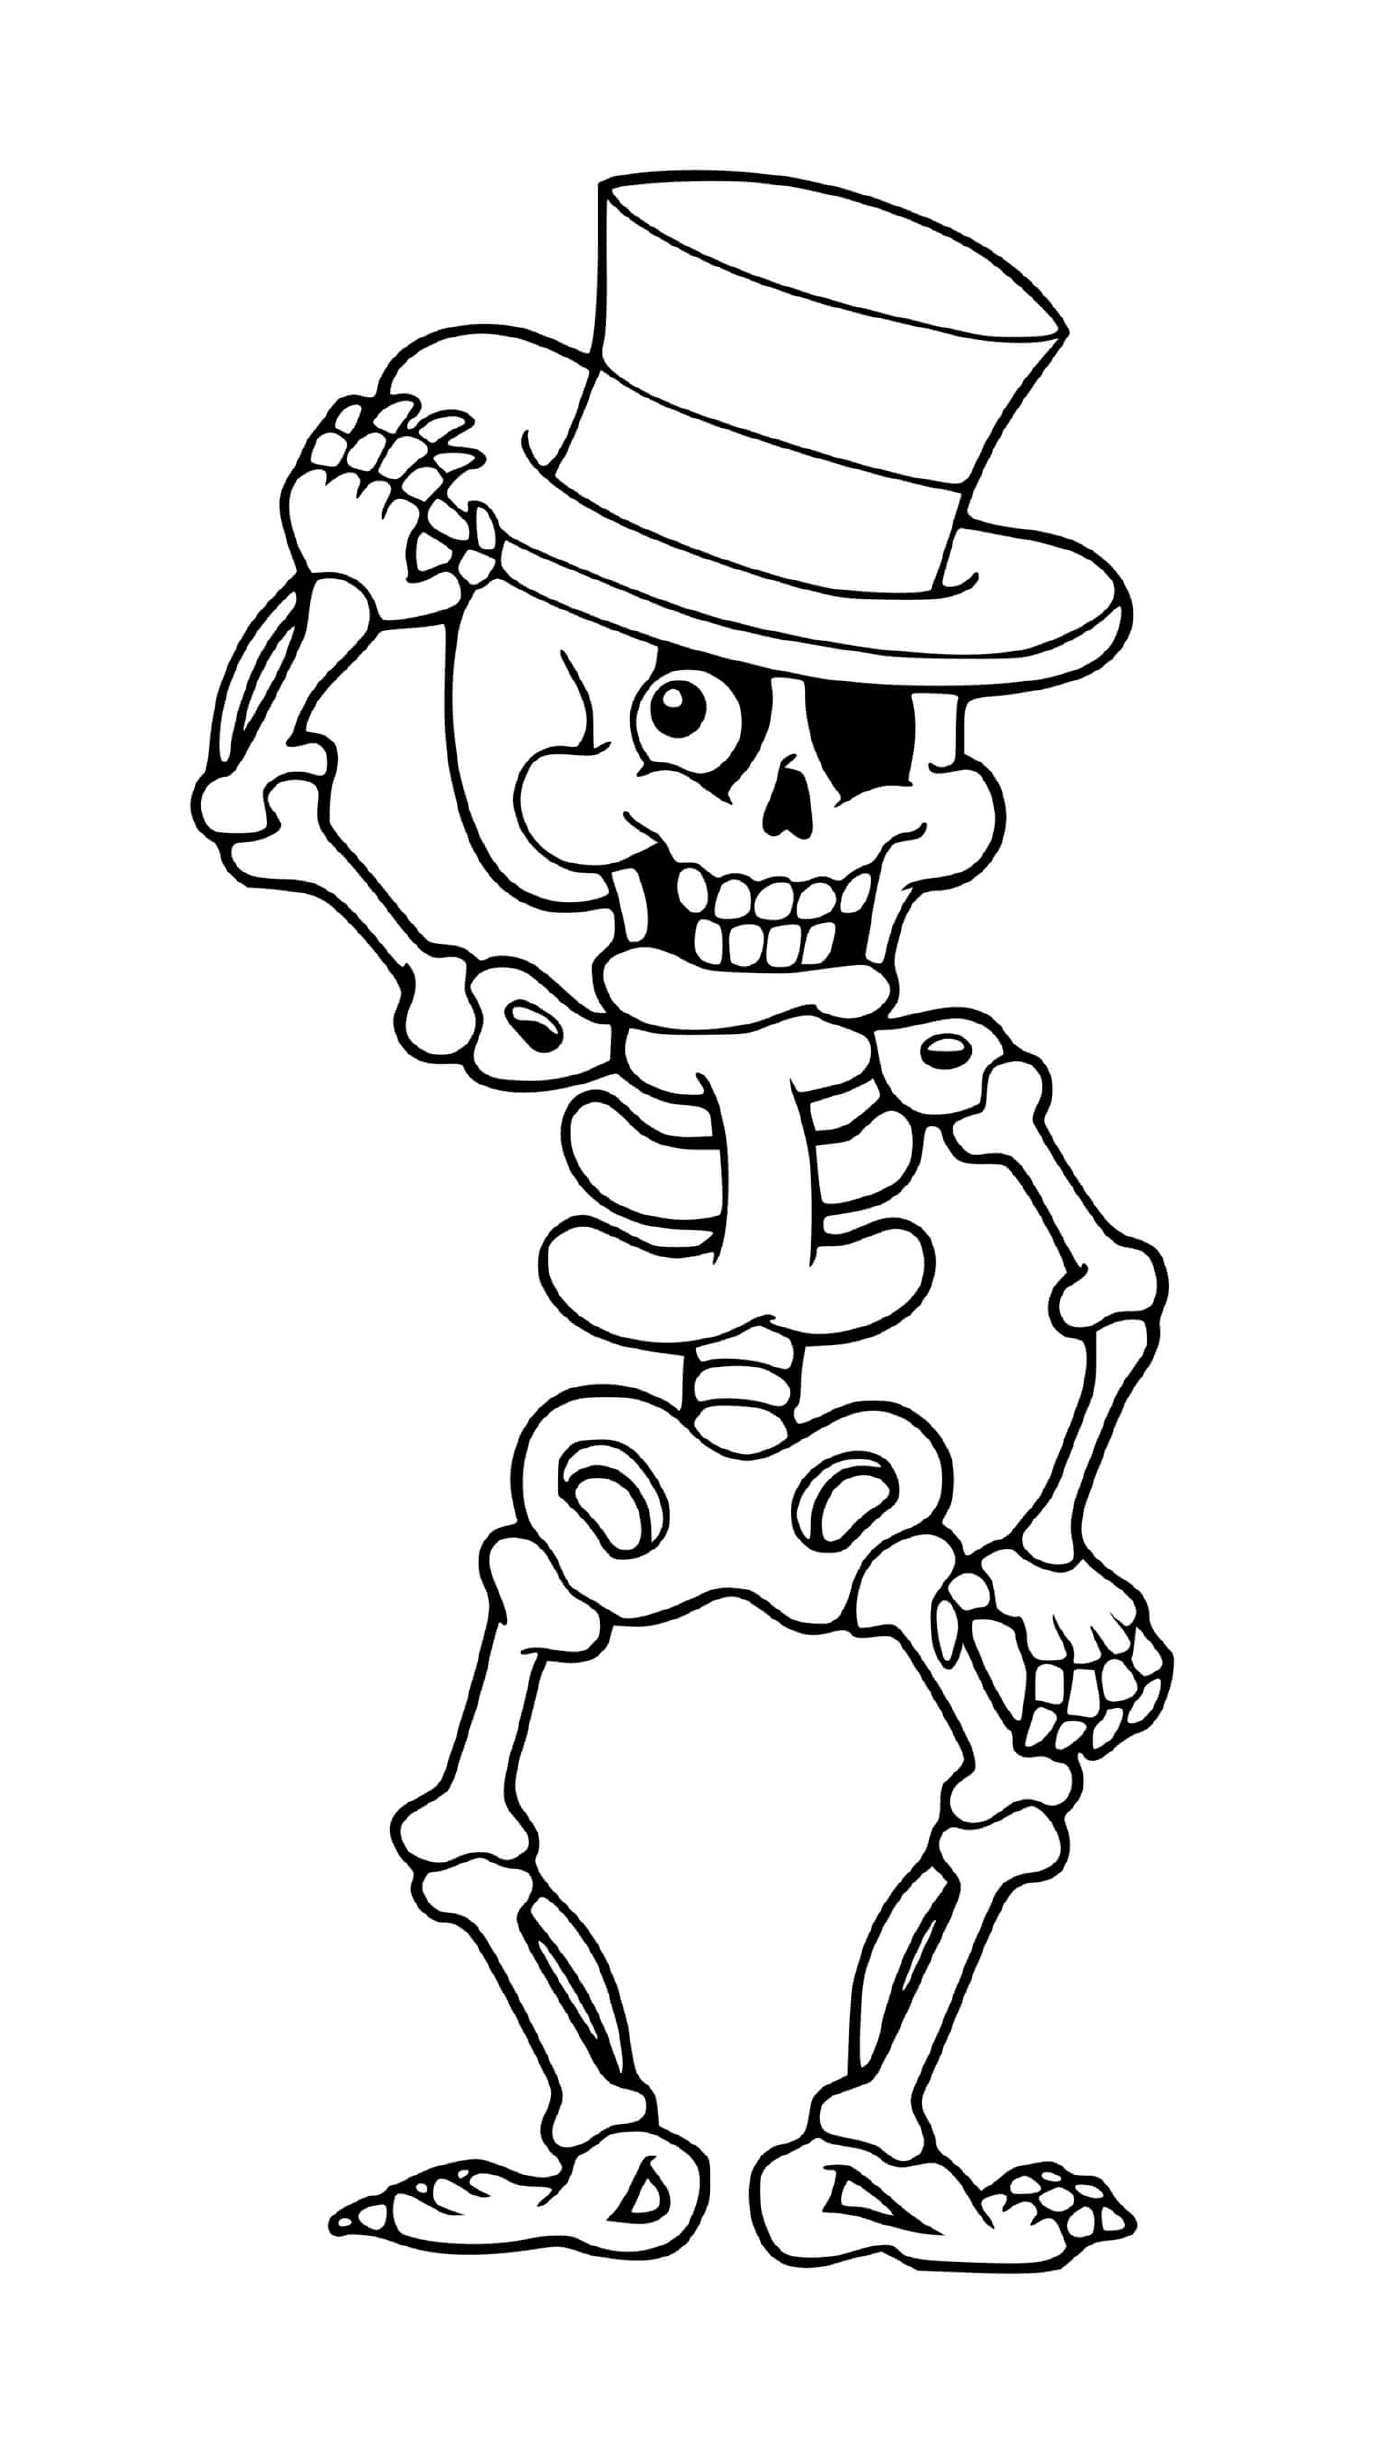  Esqueleto divertido con sombrero 